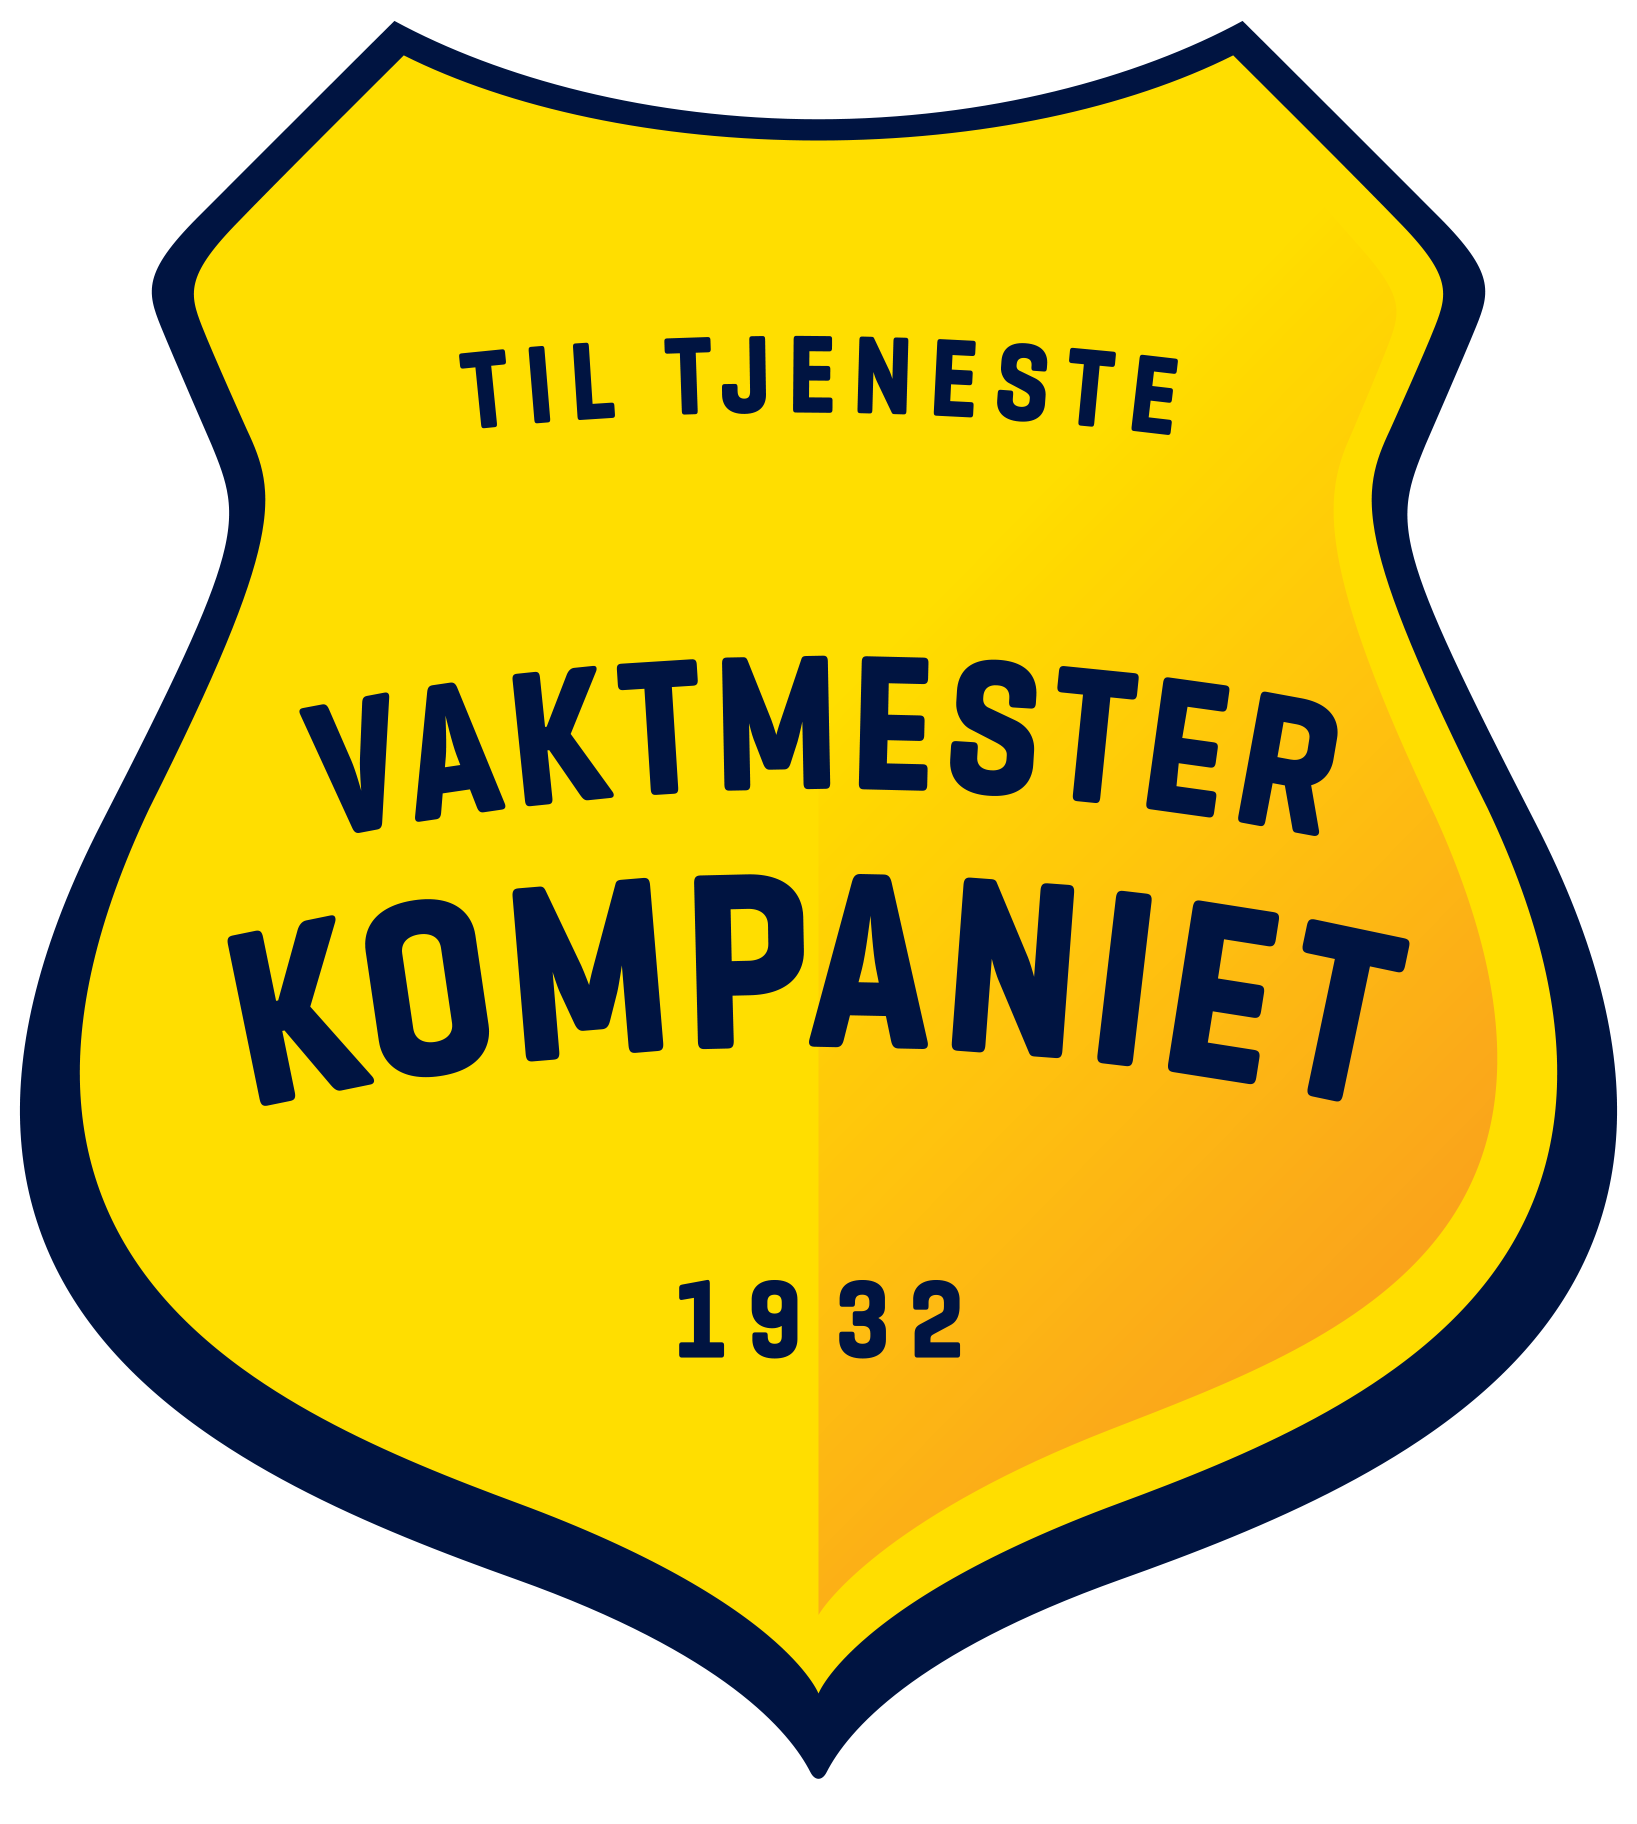 Sample logo